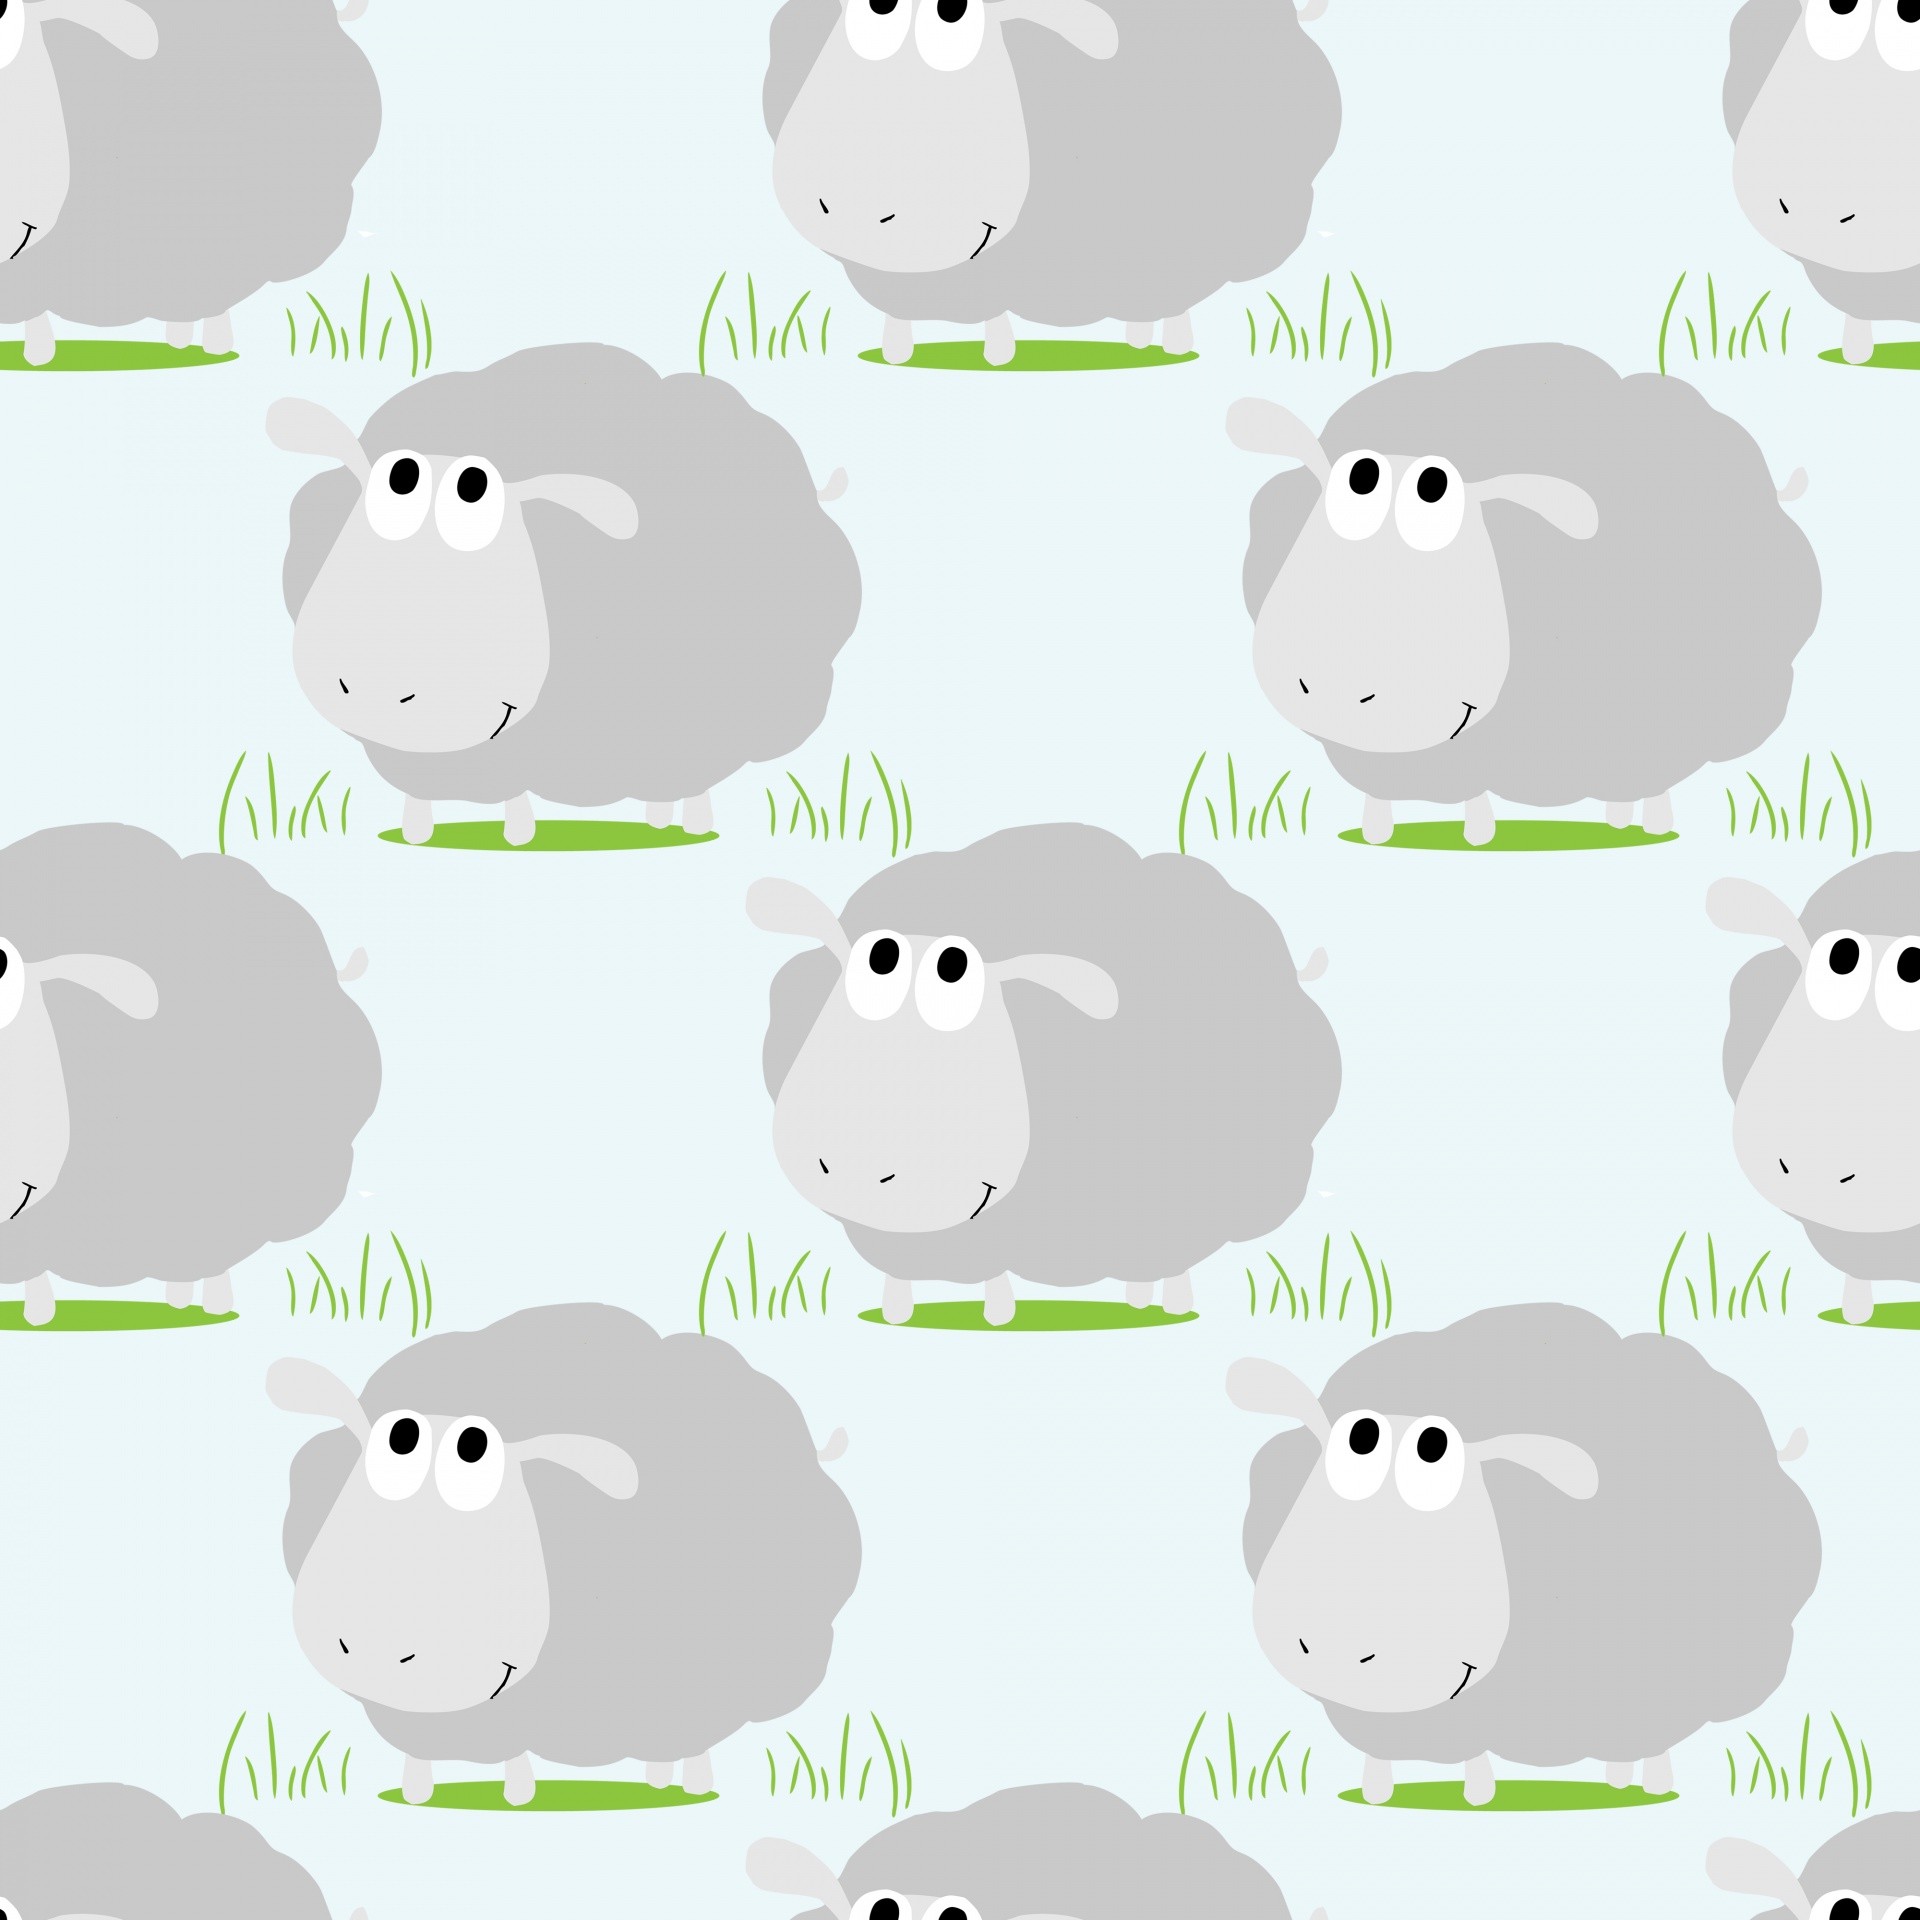 1920x1920 sheep,cartoon,illustration,wallpaper,background,pattern,seamless,cute,